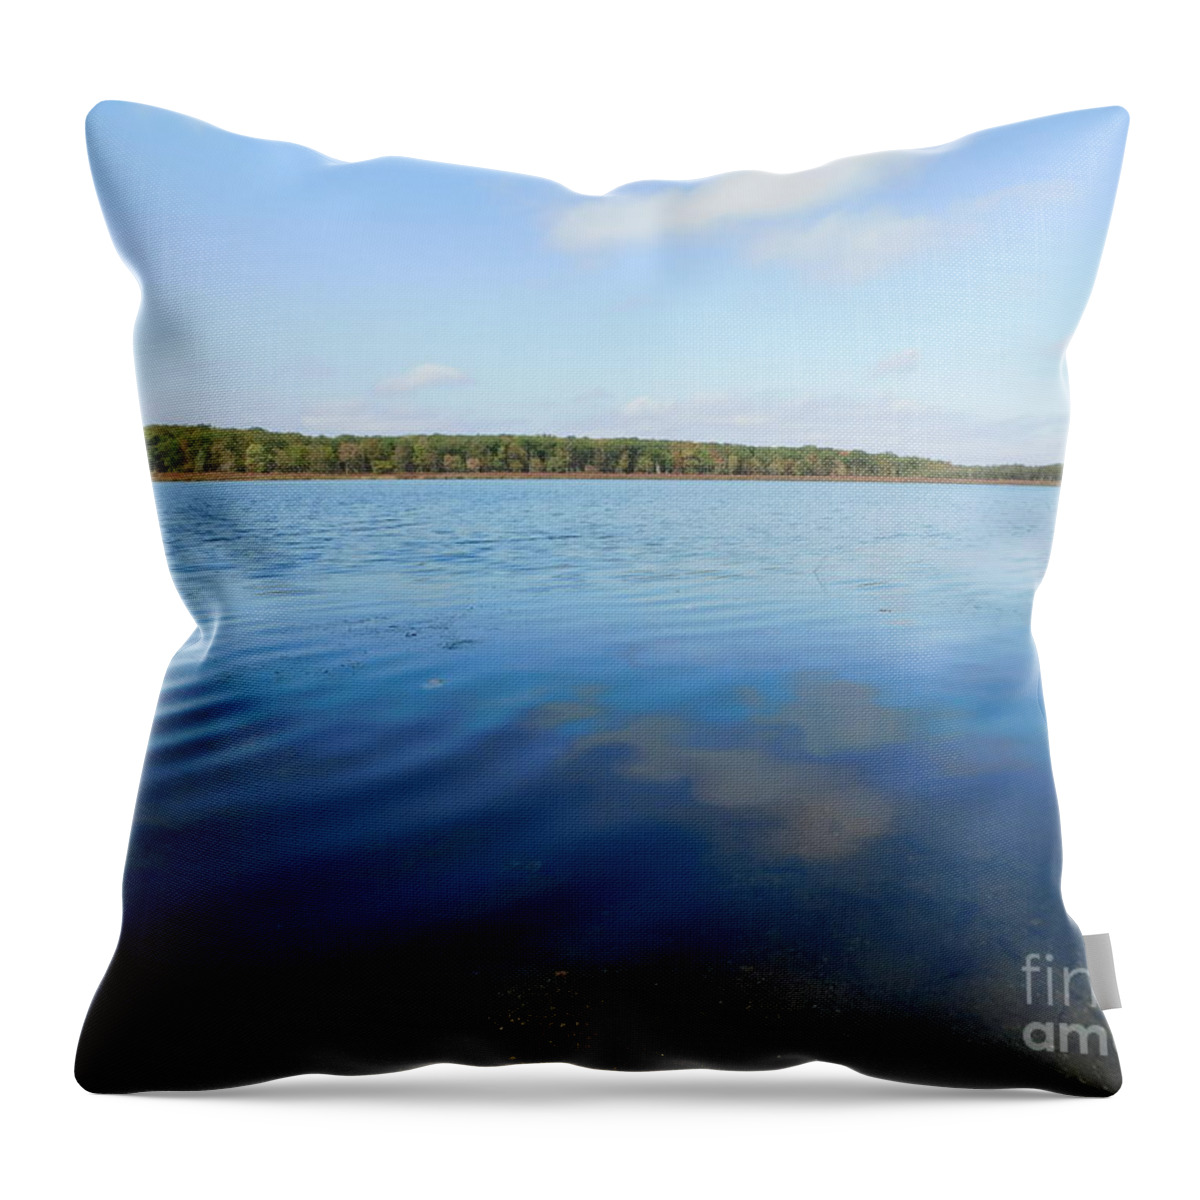 Poconos Country Lake Throw Pillow featuring the photograph Poconos Country Lake by Barbra Telfer